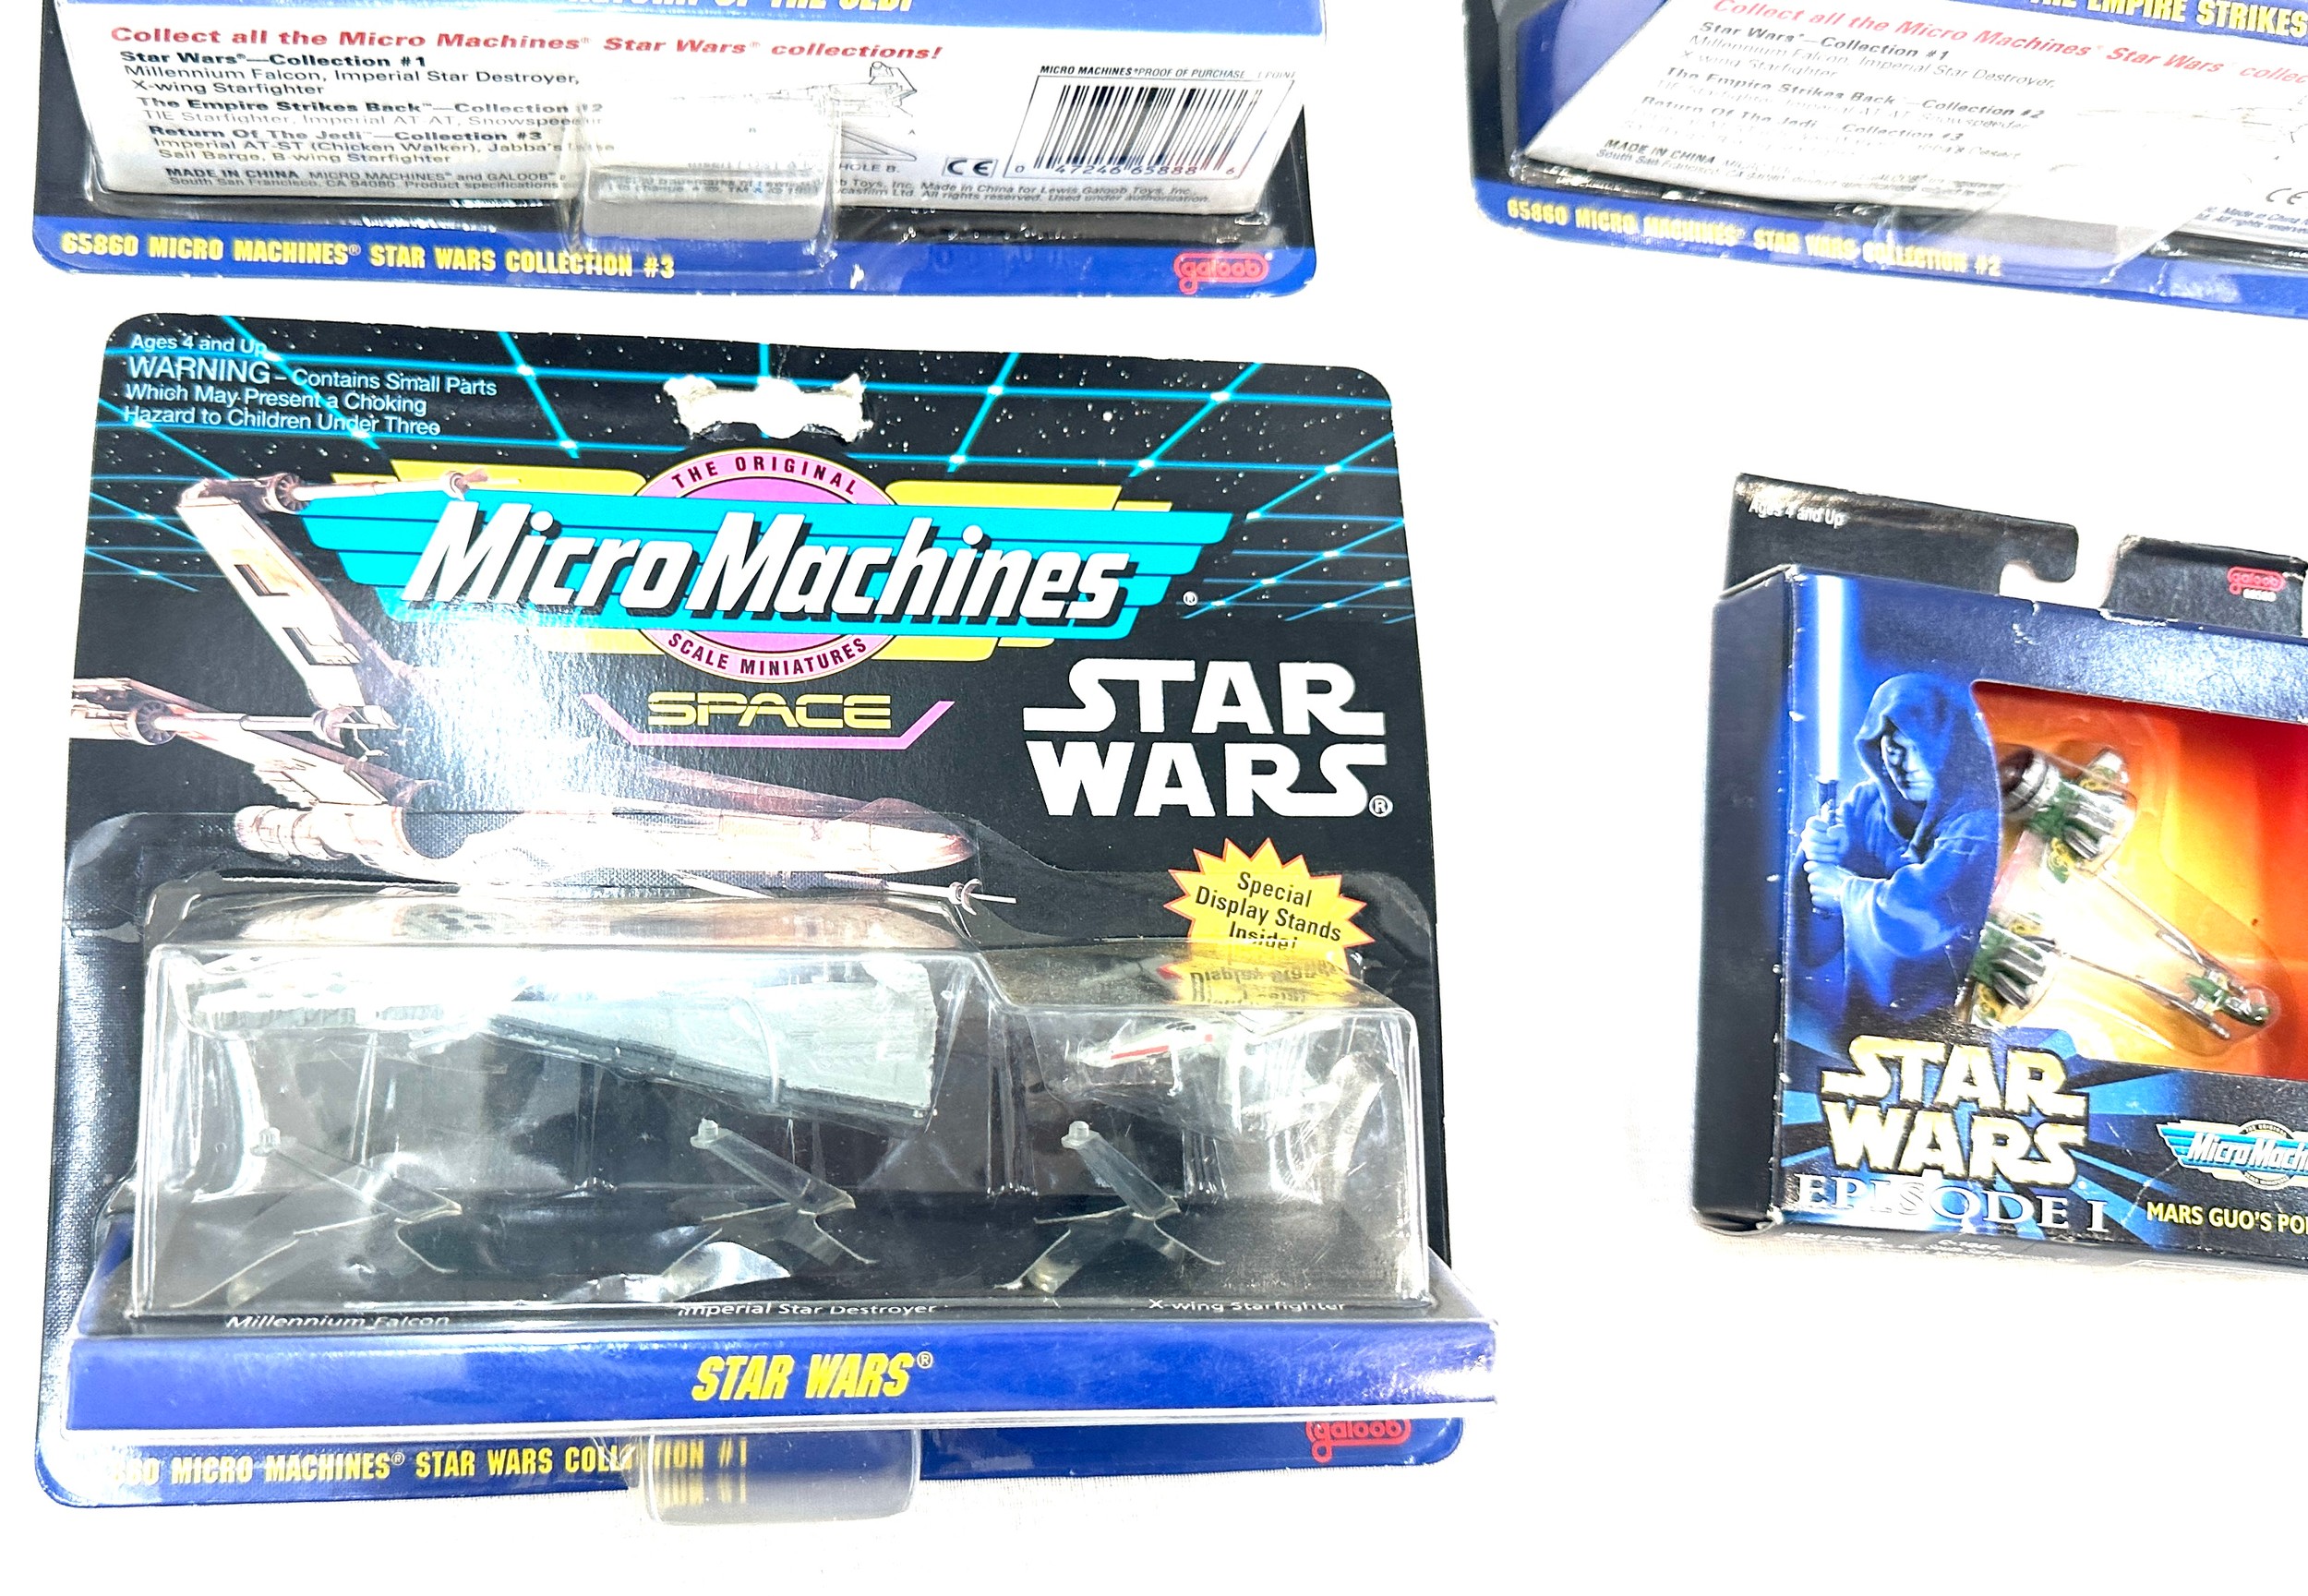 Micro machines Star Wars Empire strikes back, Star Wars, Return of the Jedi, Mars Guo's Podracer, - Image 4 of 5